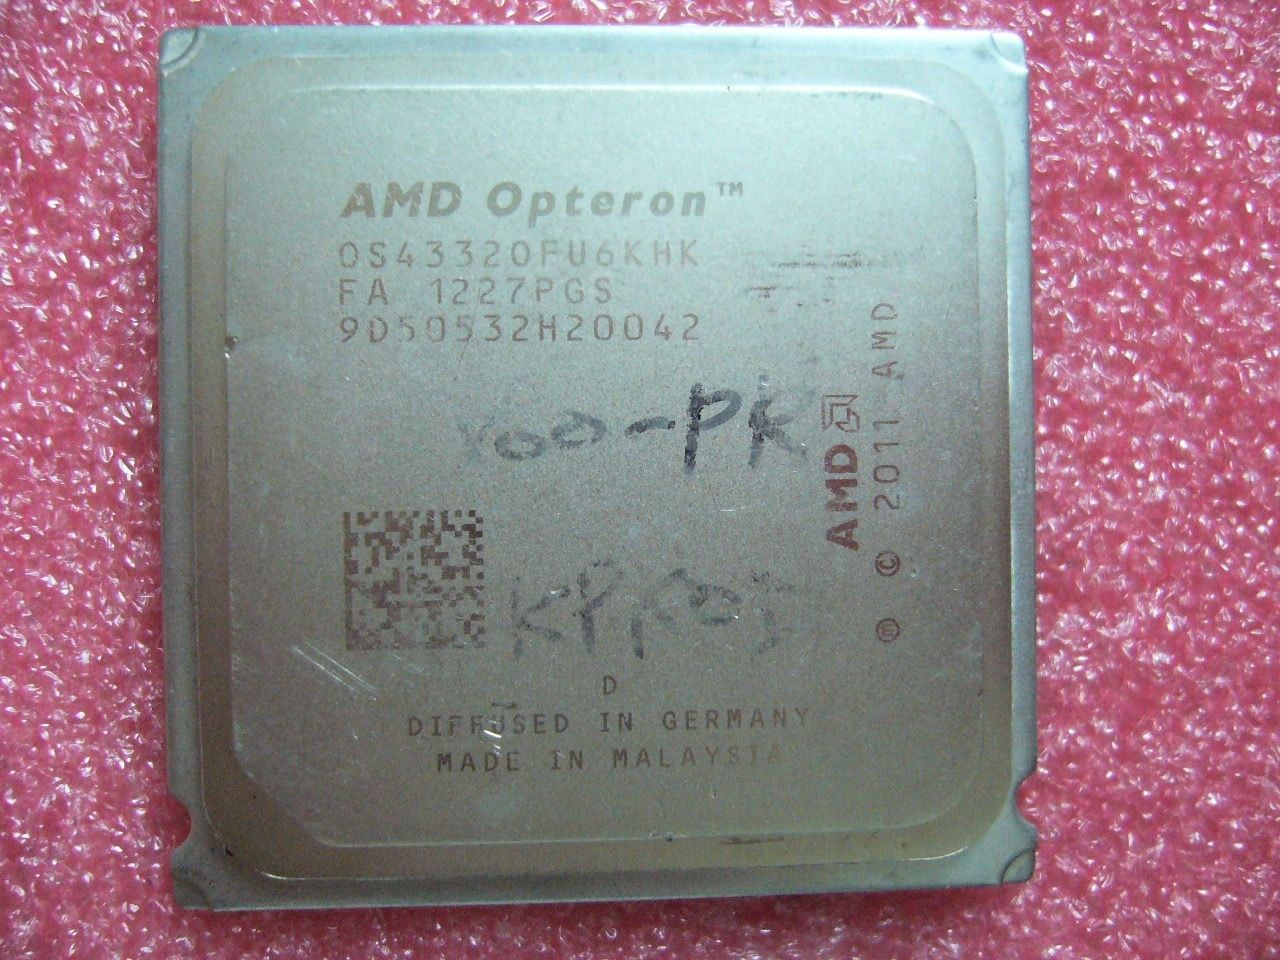 QTY 1x AMD Opteron 4332 HE 3 GHz Six Core (OS4332OFU6KHK) CPU Socket C32